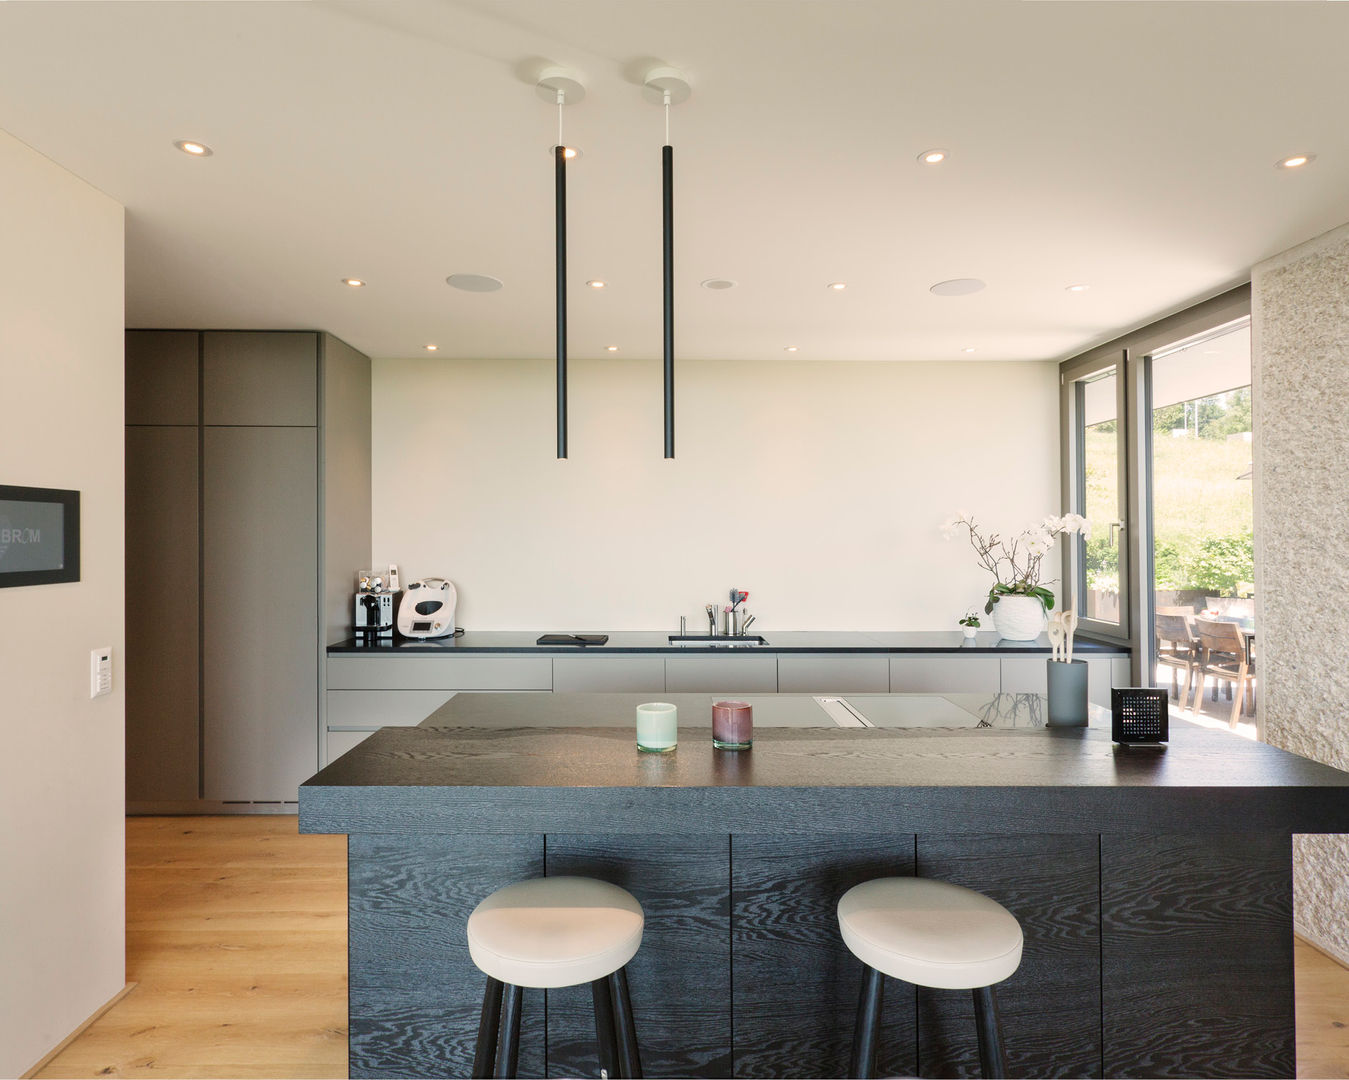 Objekt 340, meier architekten zürich meier architekten zürich Modern kitchen Wood Wood effect